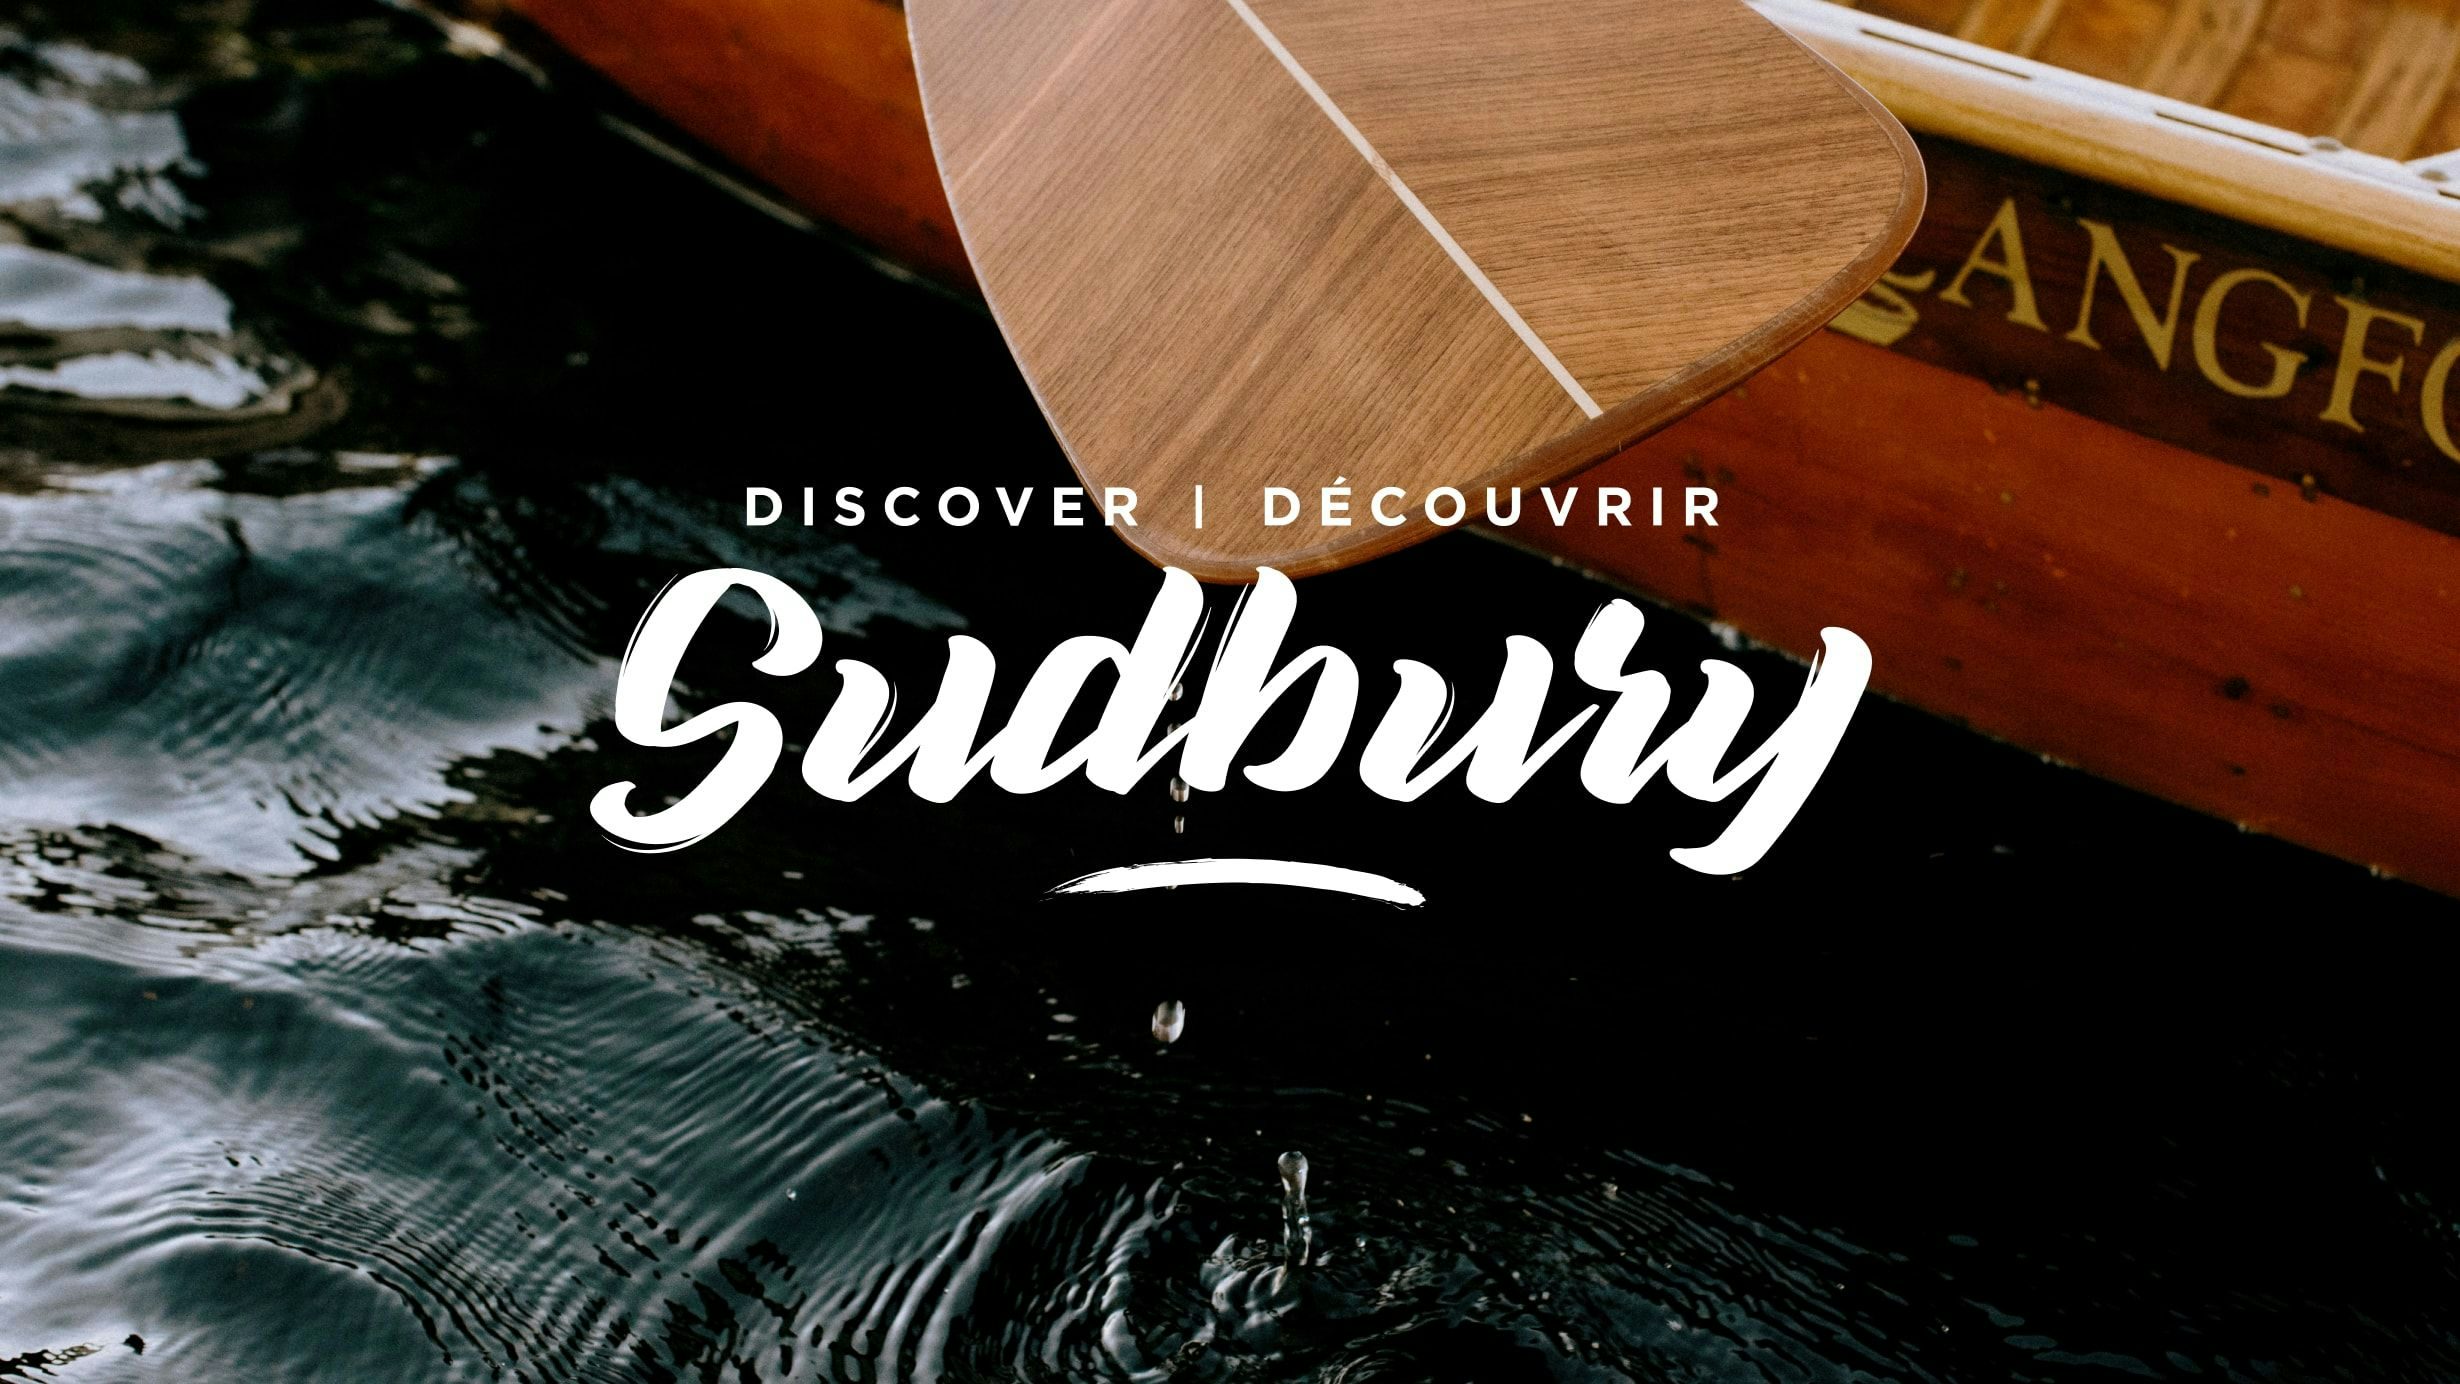 Branded Discover Sudbury masthead for the City of Greater Sudbury